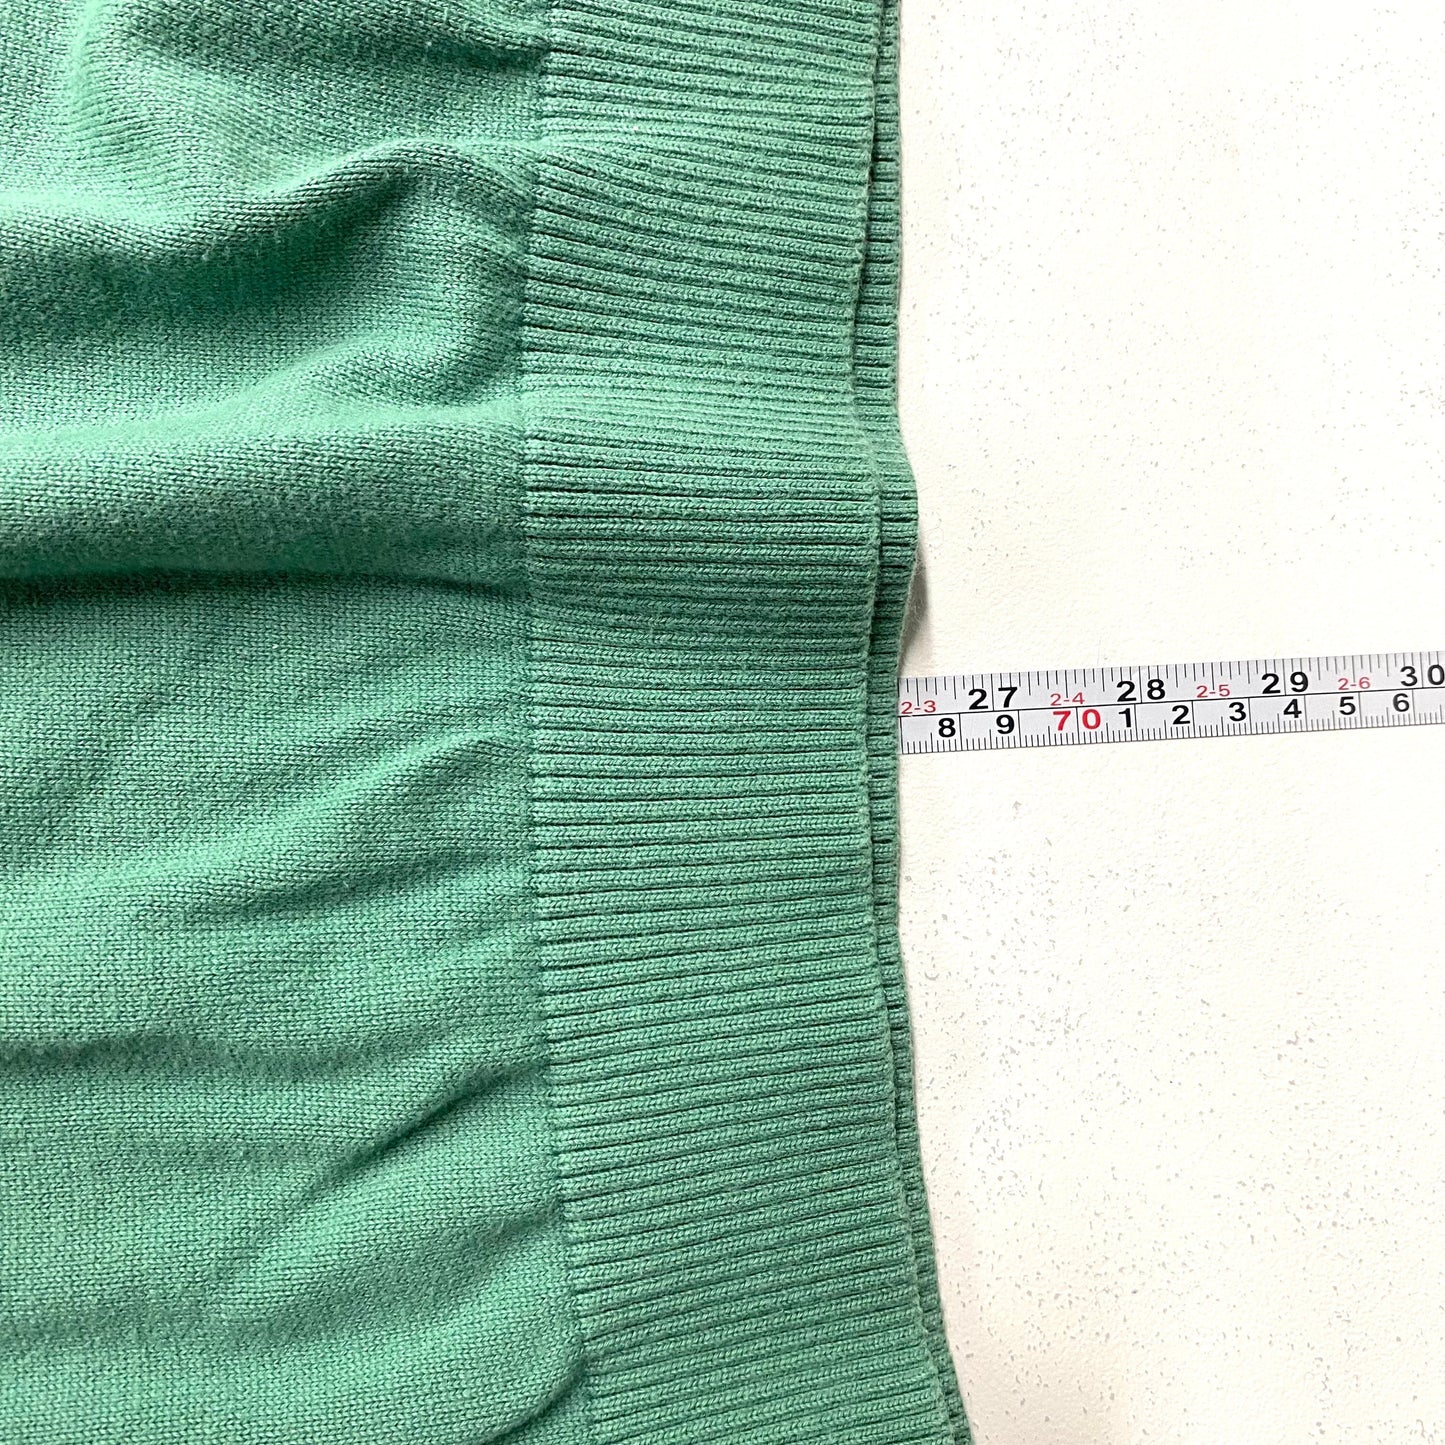 Sharp-Looking Vineyard Vines Mens Size M Green ¼ Pullover Sweater Sweatshirt L/s